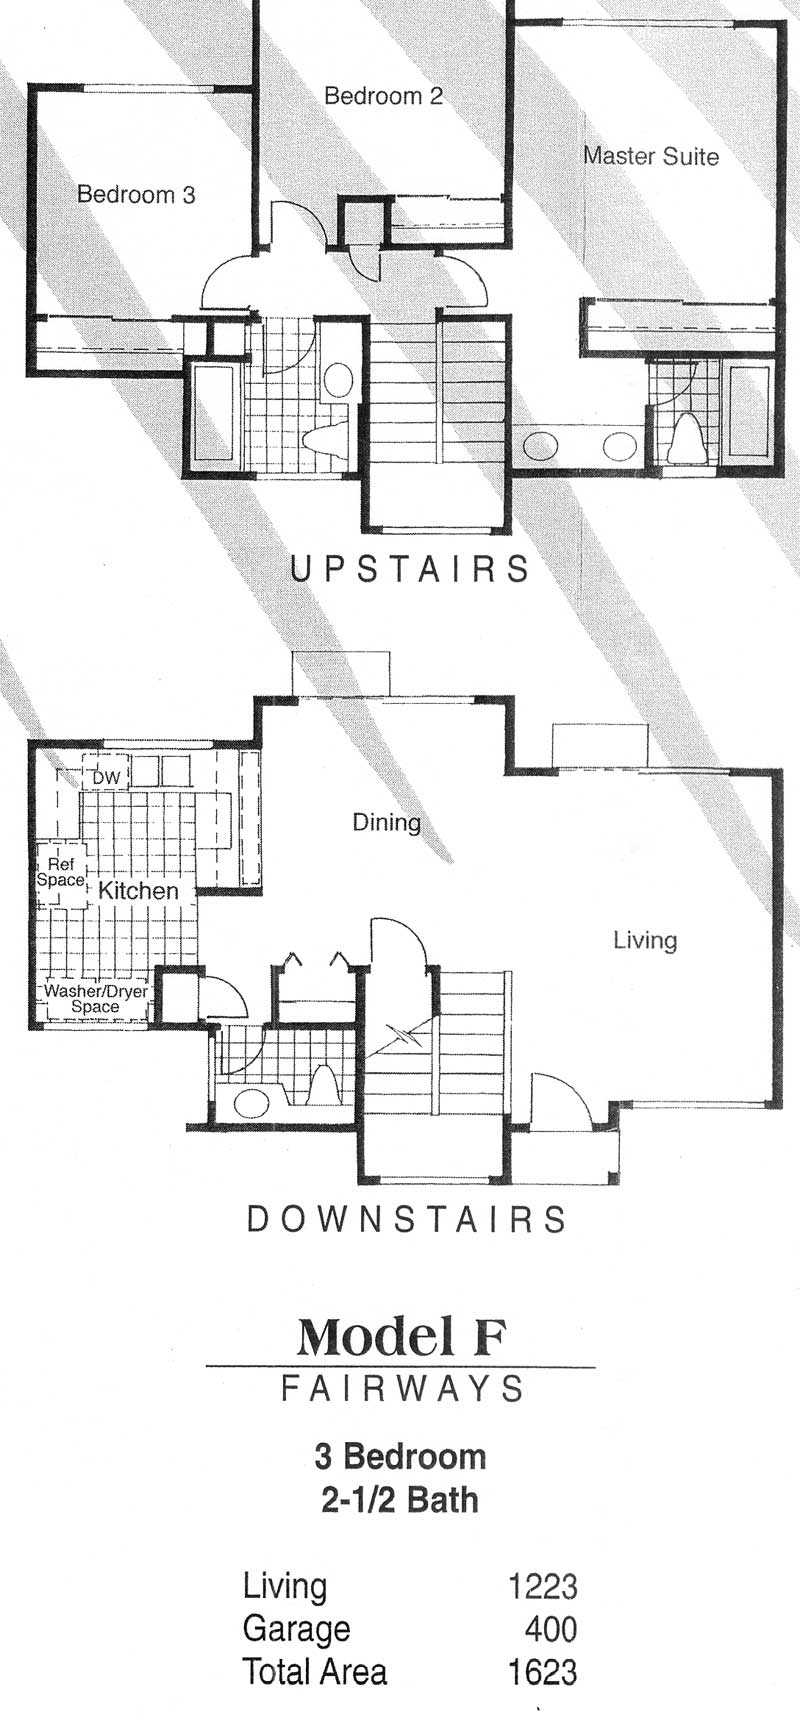 Model F - Fairways 3 bedroom / 2-1/2 bath Living - 1,223 sq. ft. Garage - 400 sq. ft. Total Area - 1,623 sq. ft.